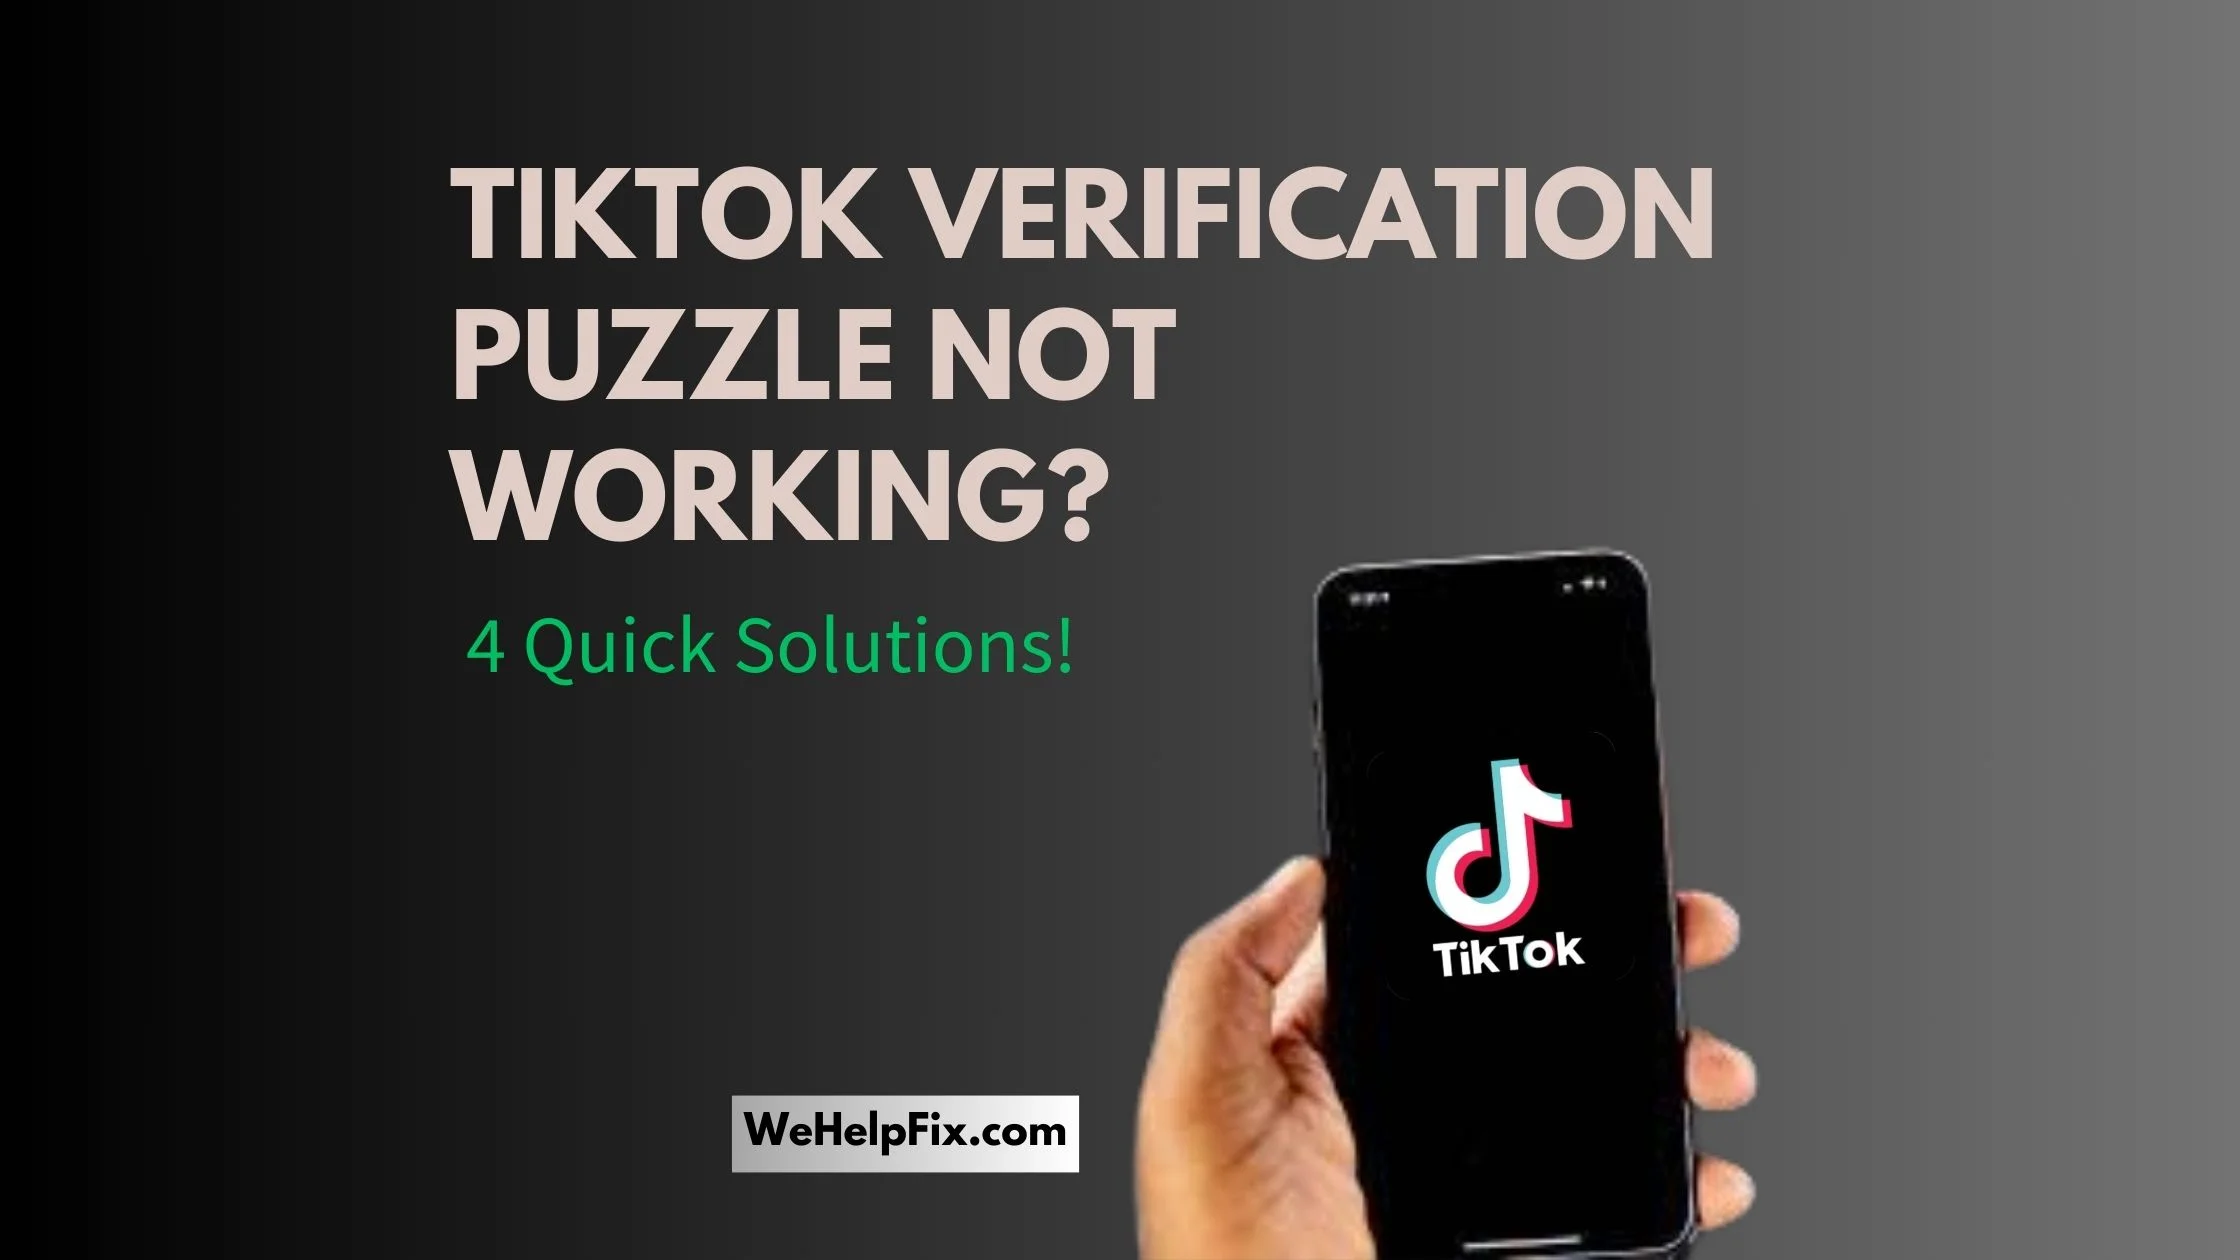 TikTok Verification Puzzle Not Working? 4 Quick Solutions!